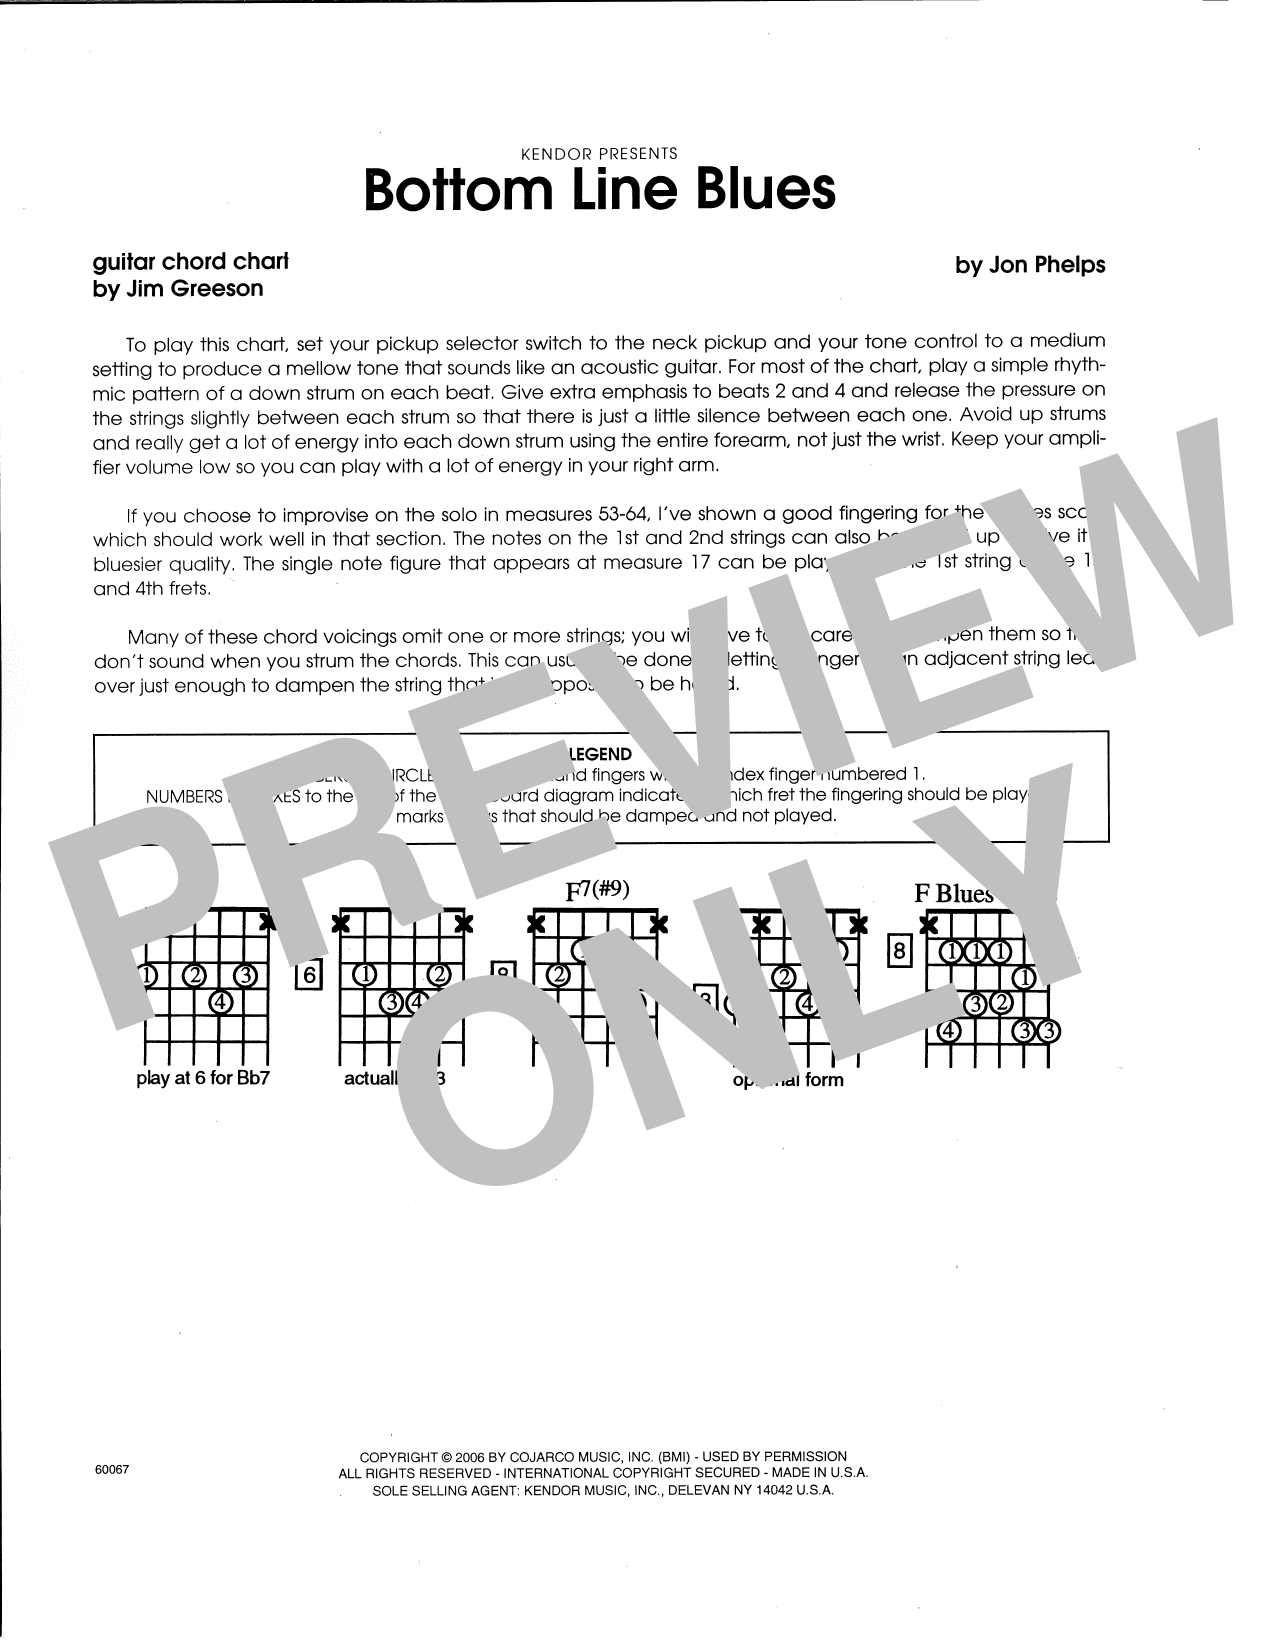 Download Jon Phelps Bottom Line Blues - Guitar Chord Chart Sheet Music